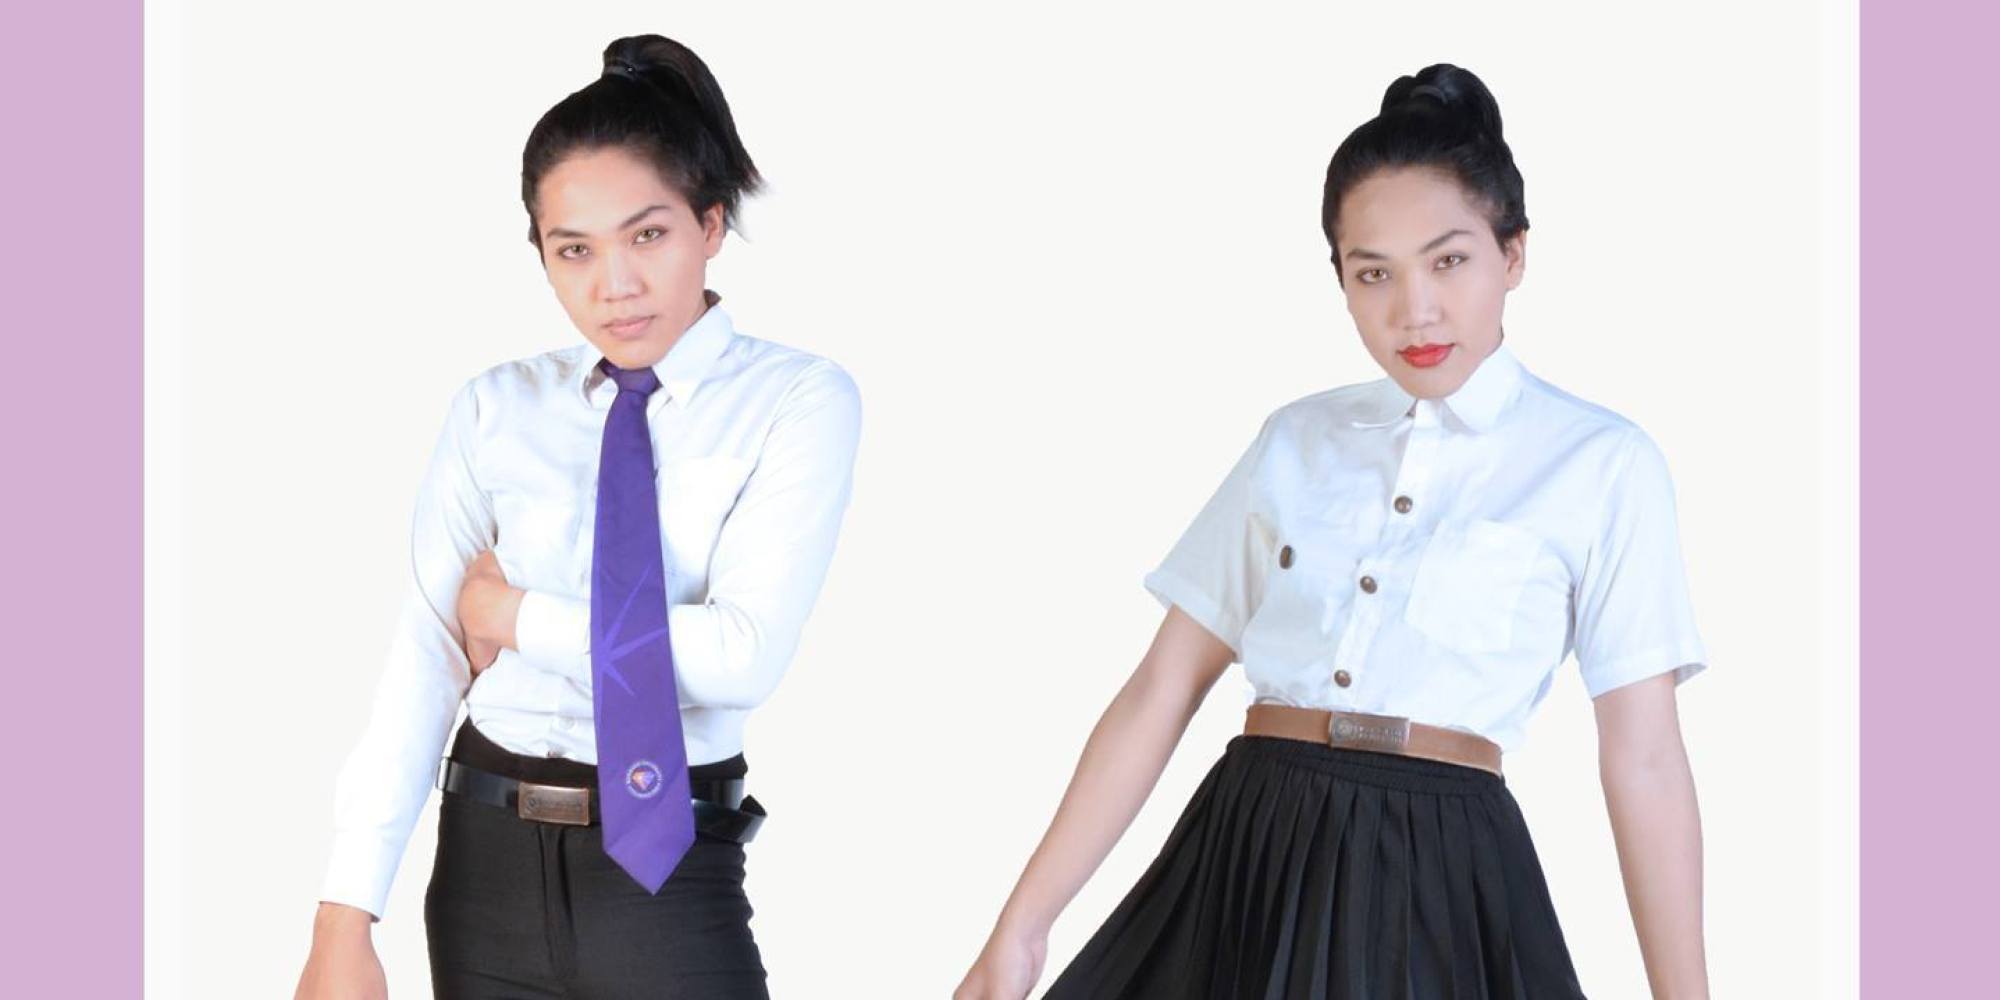 Bangkok University Adopts New Gender-Inclusive Uniform Policy